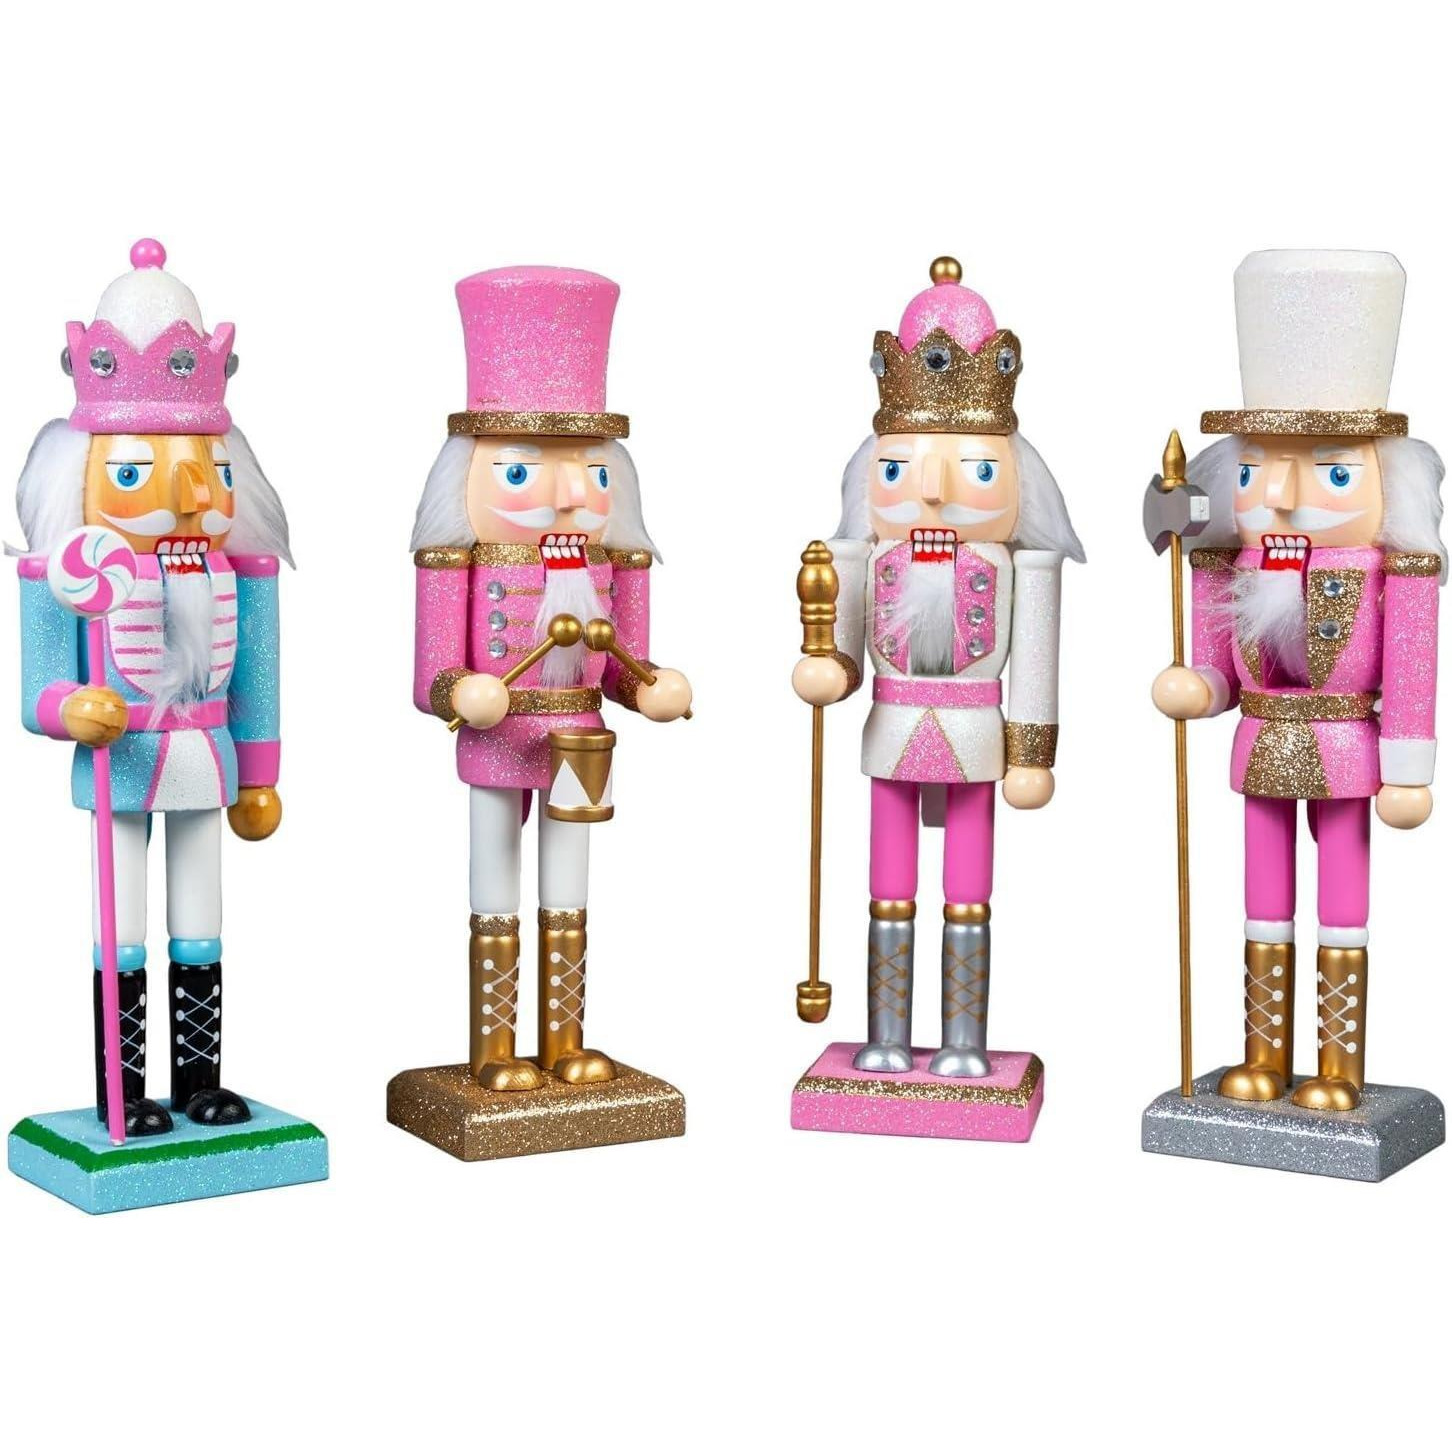 25cm Pink Wooden Nutcrackers Soldiers King Drummer Christmas Ornament 4pcs Set - image 1